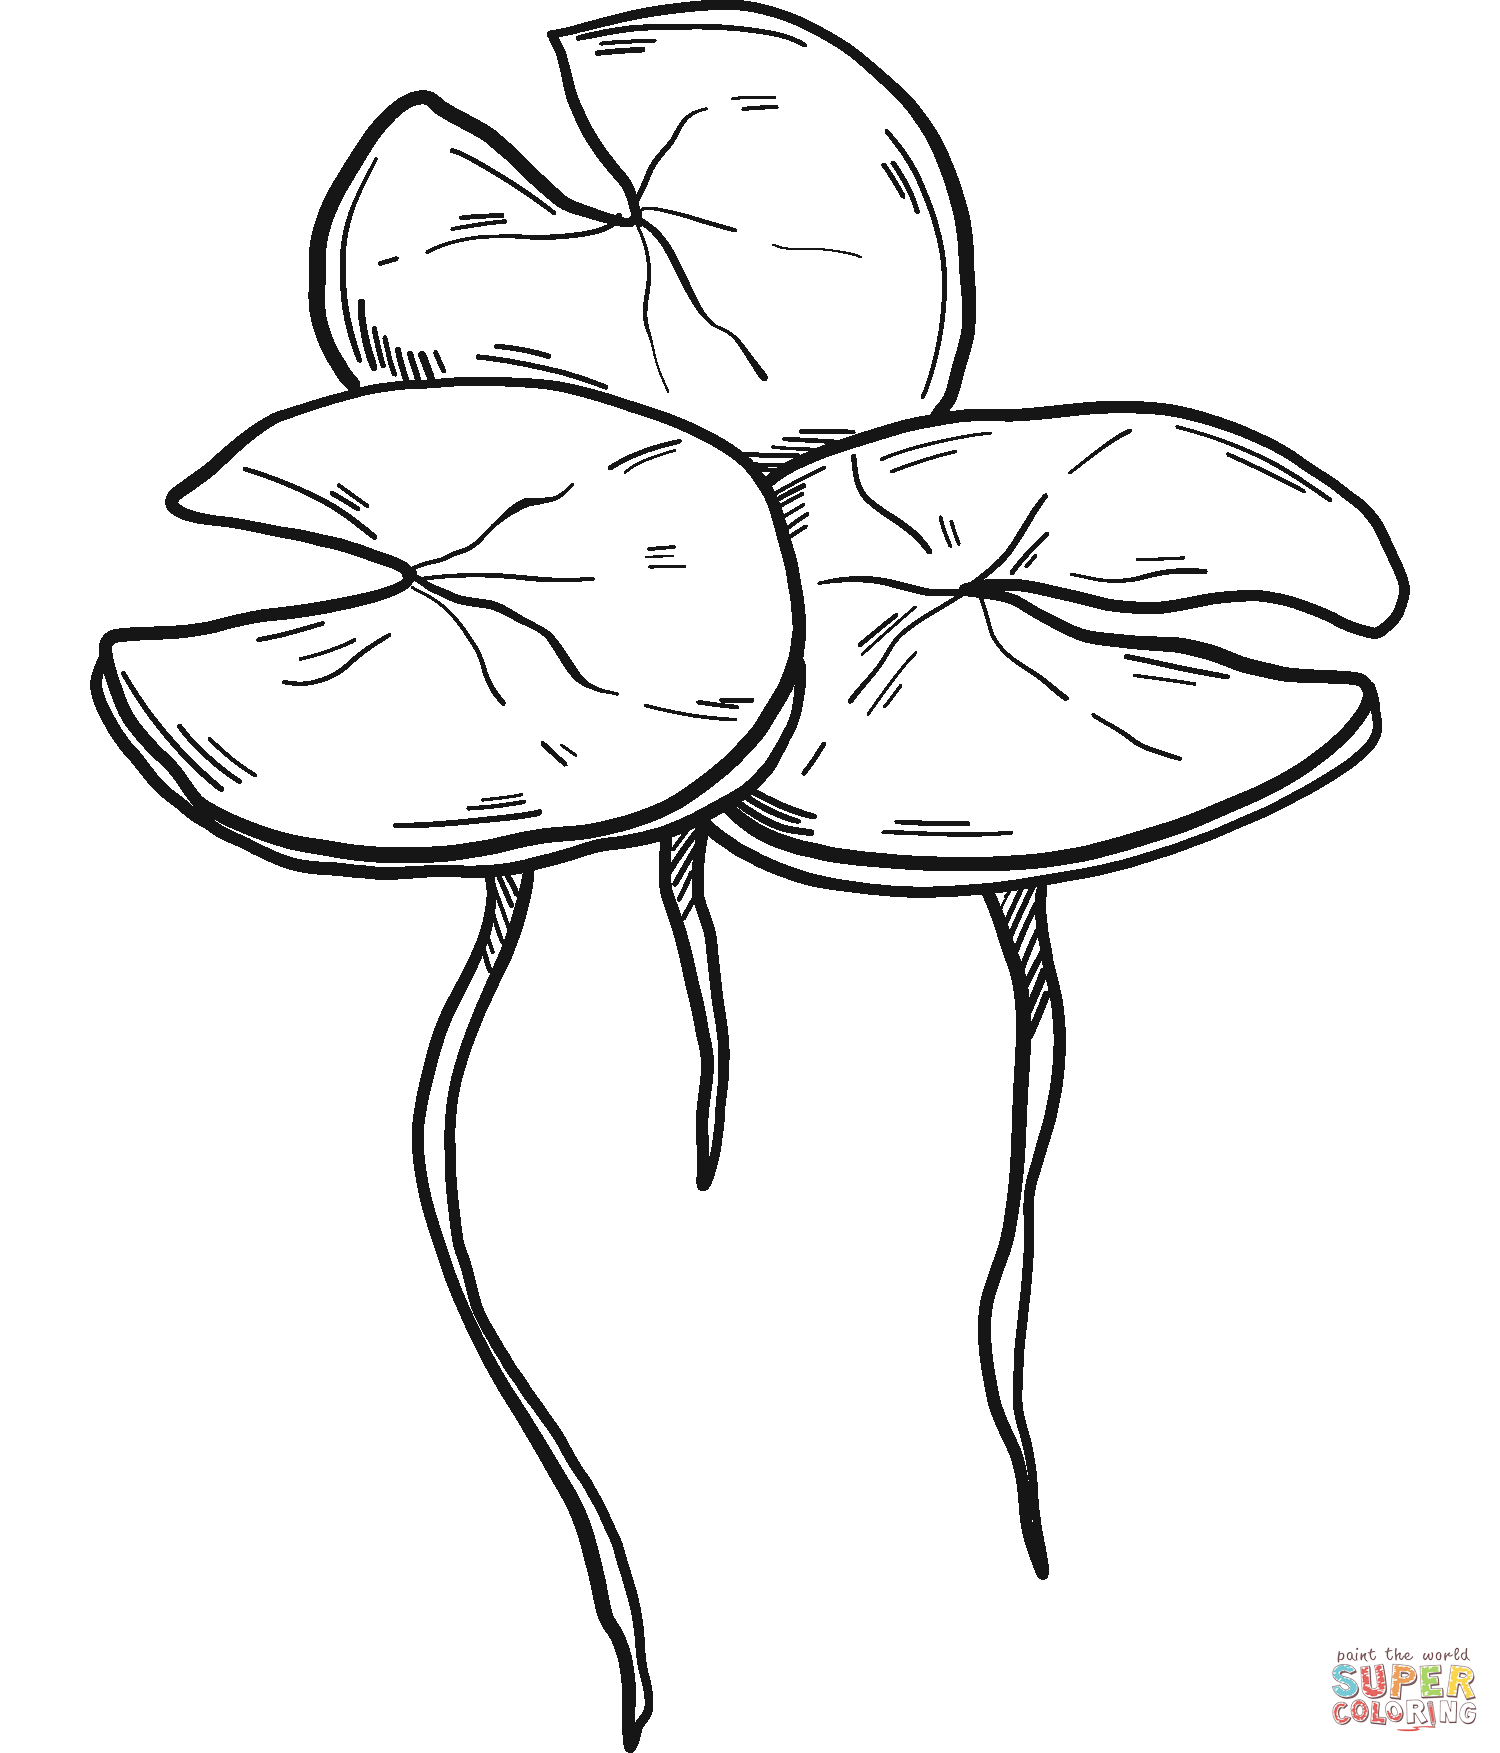 Lelieblaadjes van Water Lily